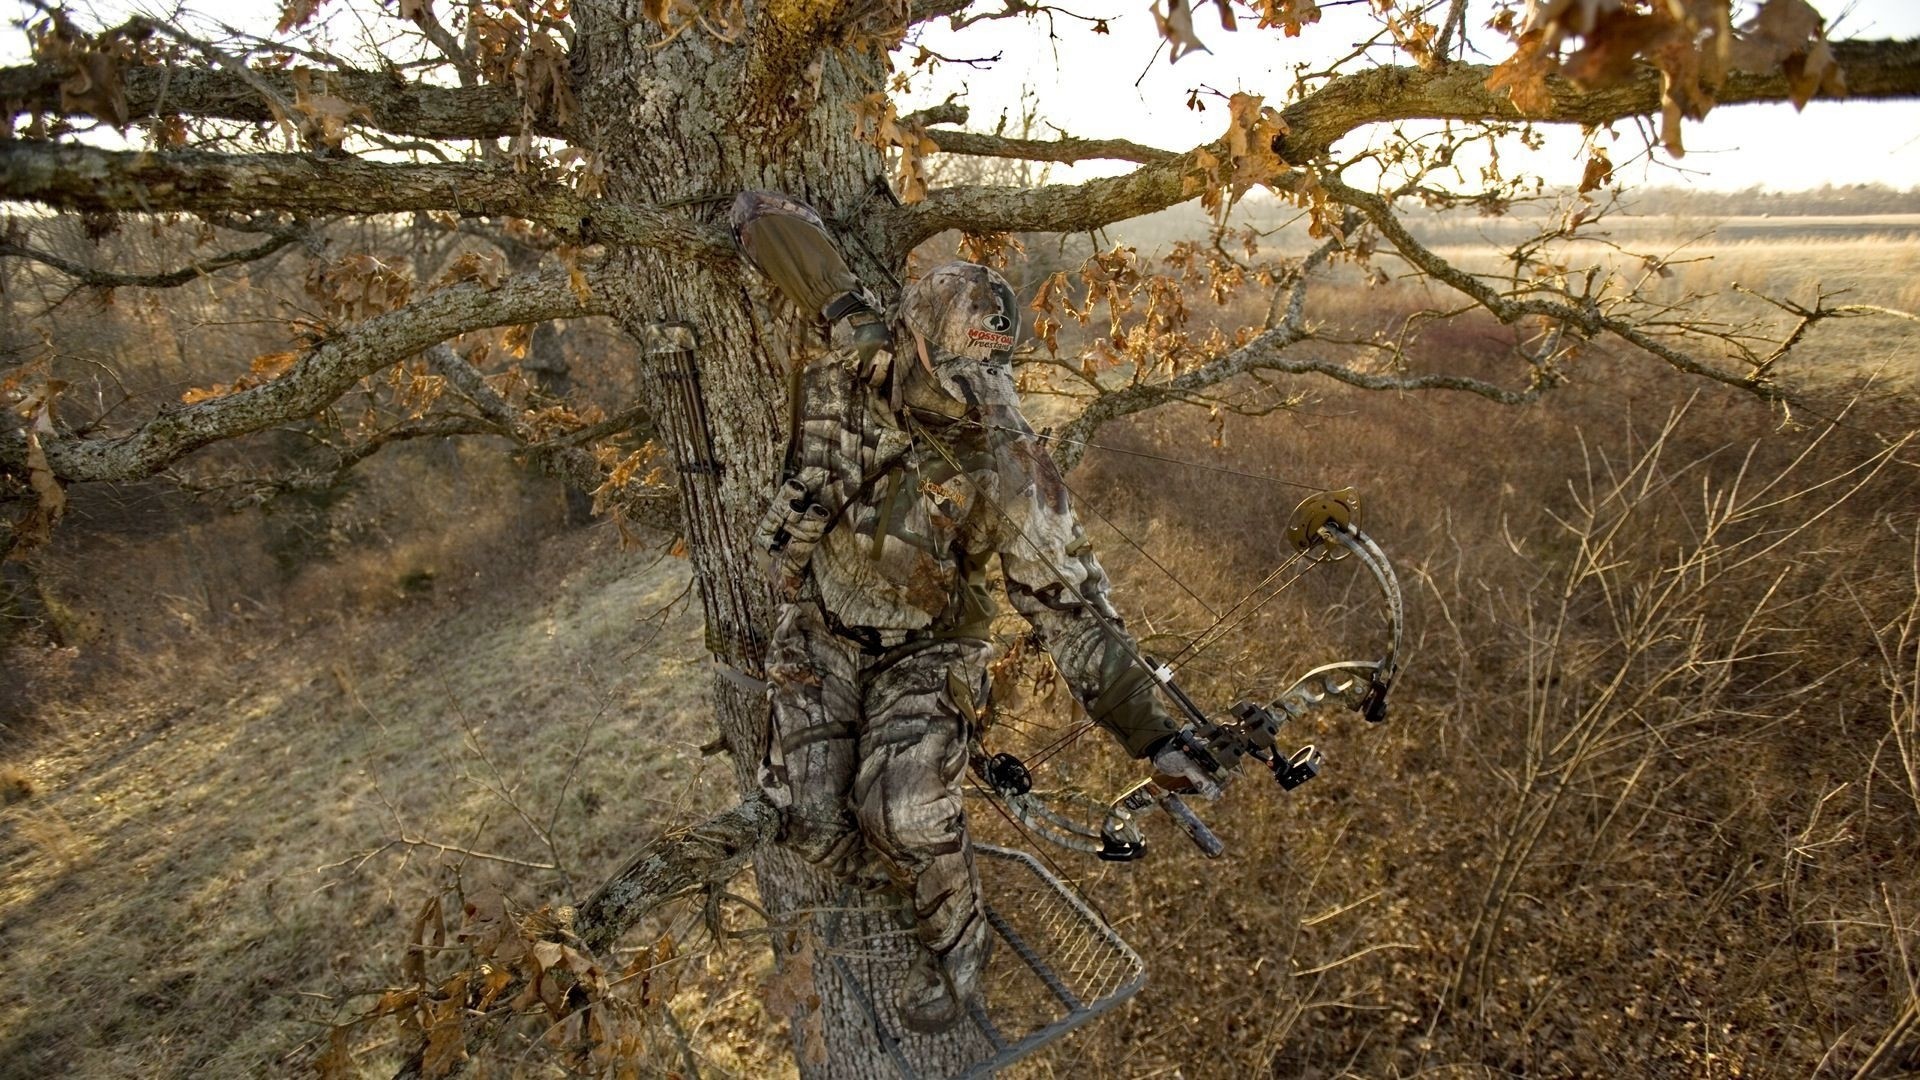 1920x1080 Title : bow hunting wallpaper mossy oak camo | deer | pinterest | hunting.  Dimension : 1920 x 1080. File Type : JPG/JPEG